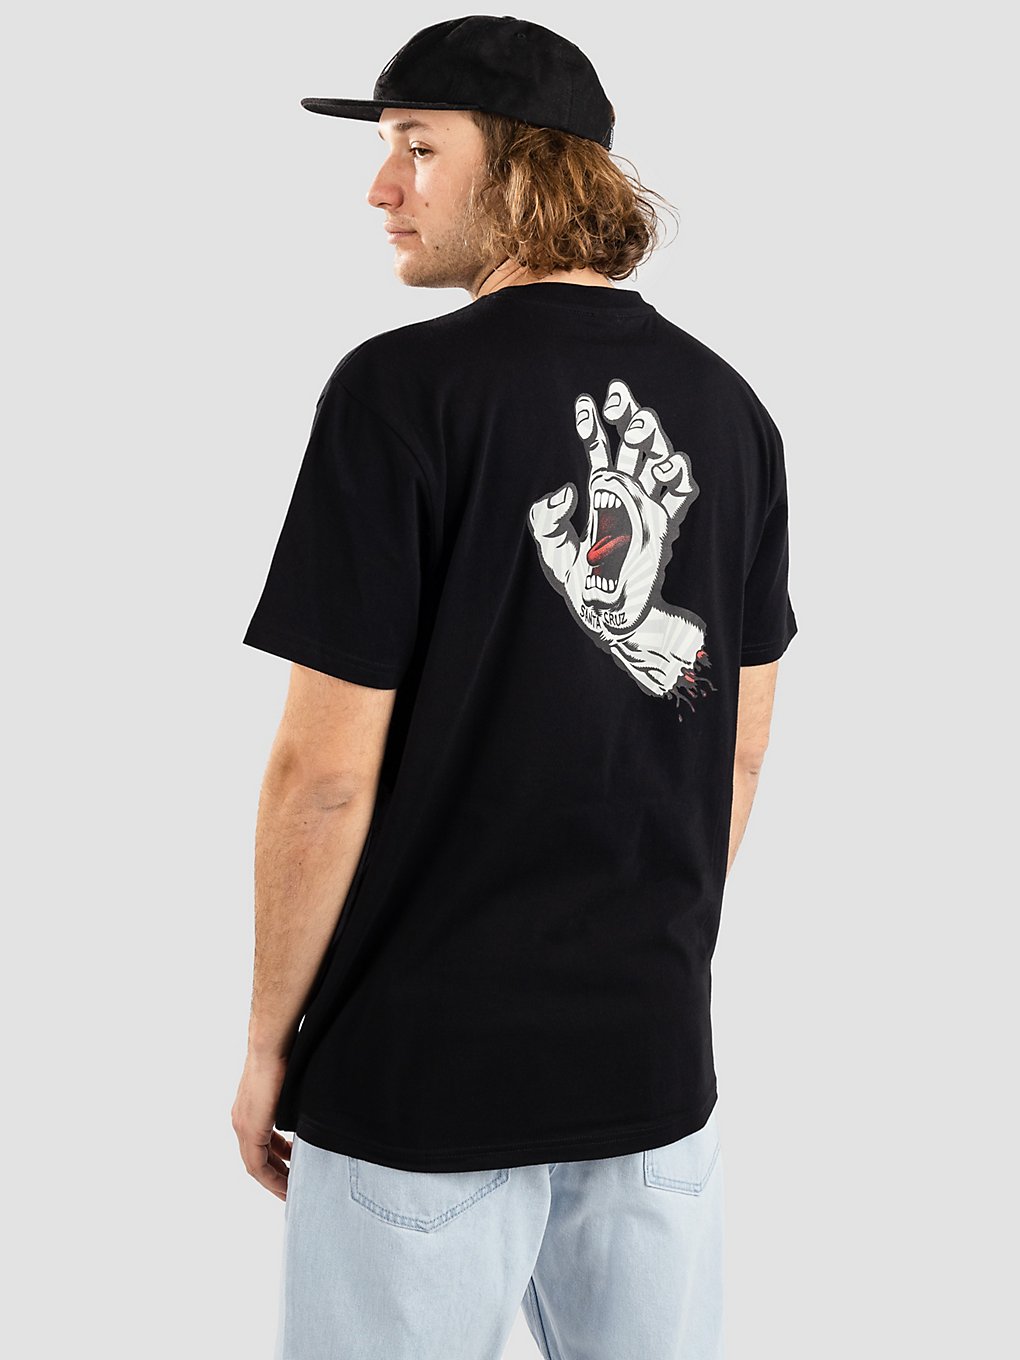 Santa Cruz Screaming Party Hand T-Shirt black kaufen